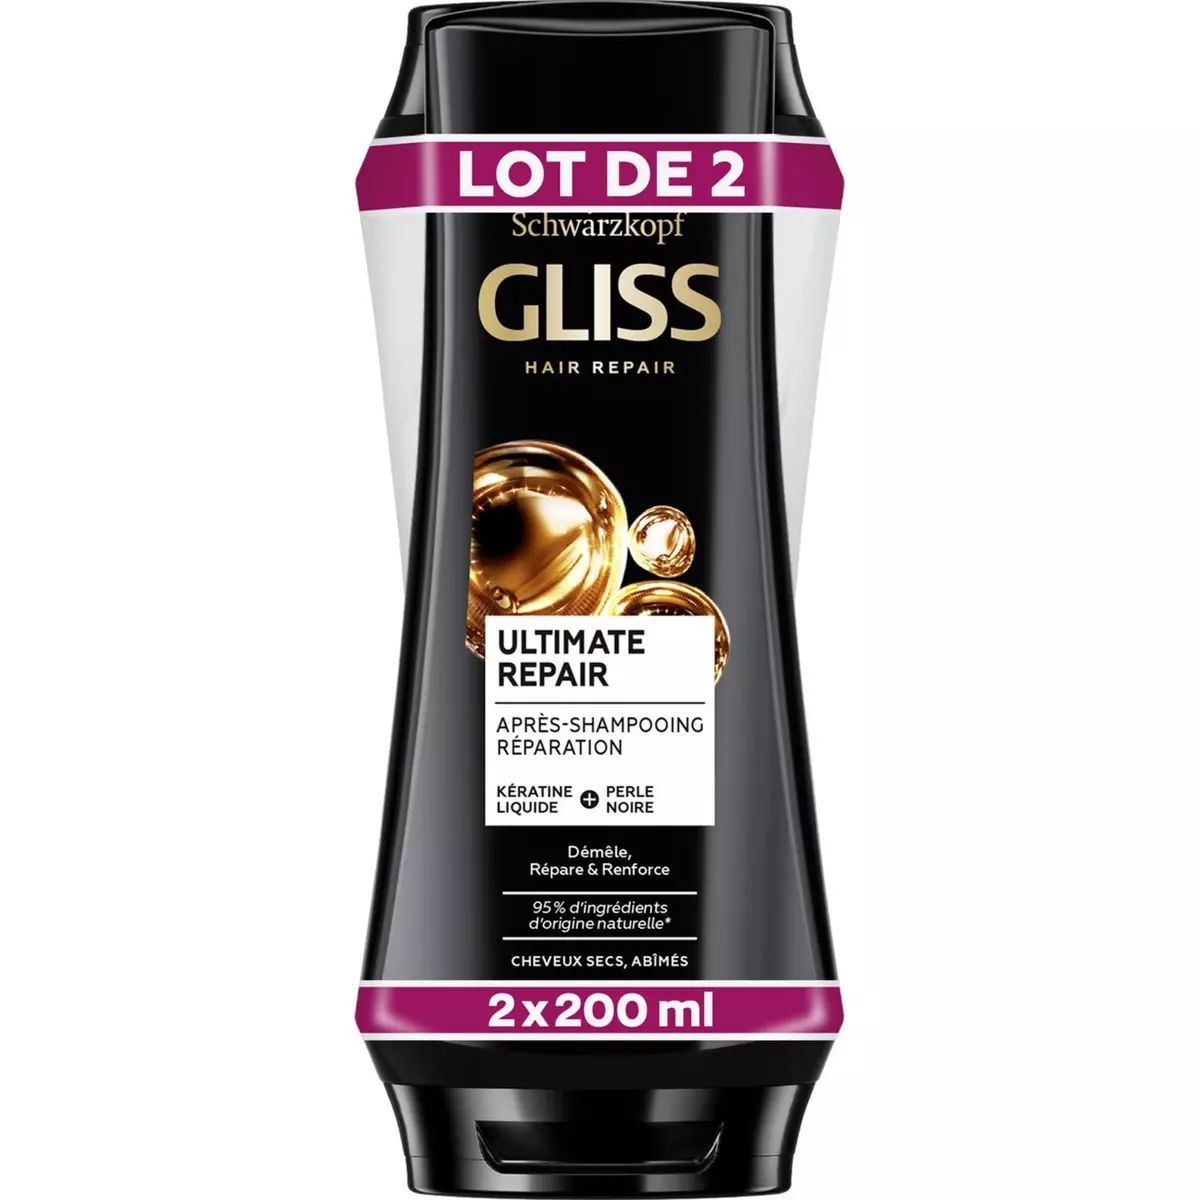 GLISS Après-shampooing démêlant cheveux extrèmement abîmés, secs 2x200ml